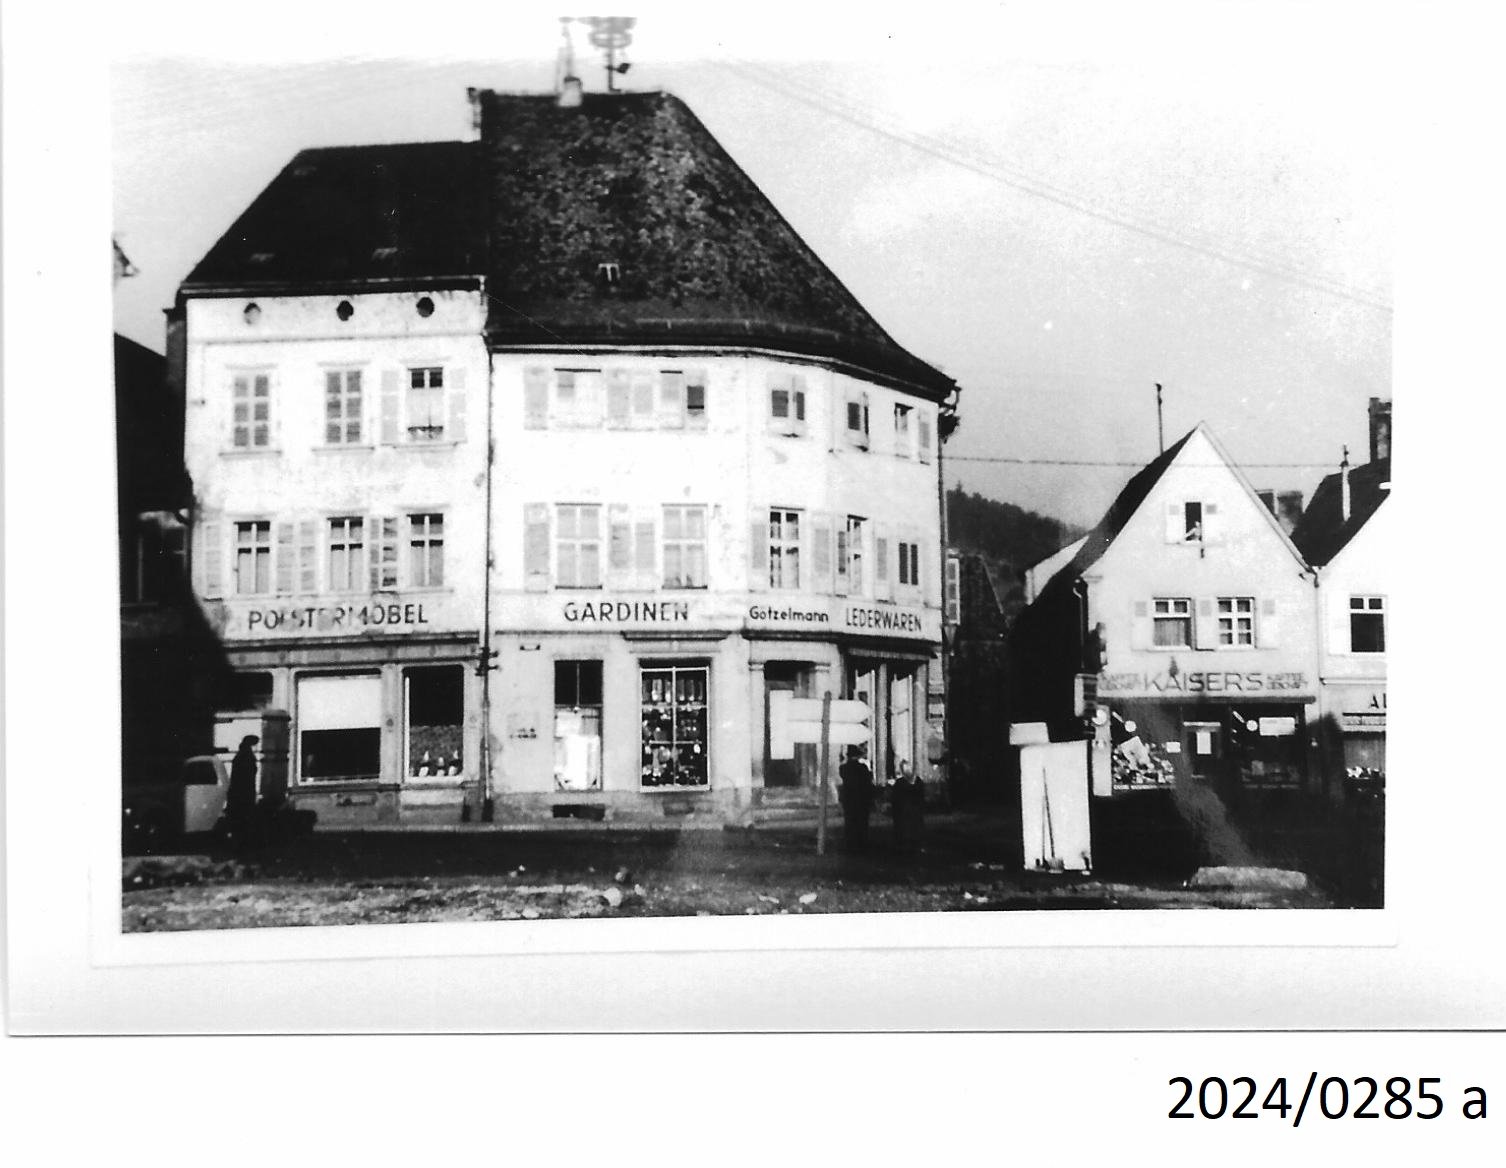 Bad Dürkheim, Westseite Römerplatz, 1950er Jahre (Stadtmuseum Bad Dürkheim im Kulturzentrum Haus Catoir CC BY-NC-SA)